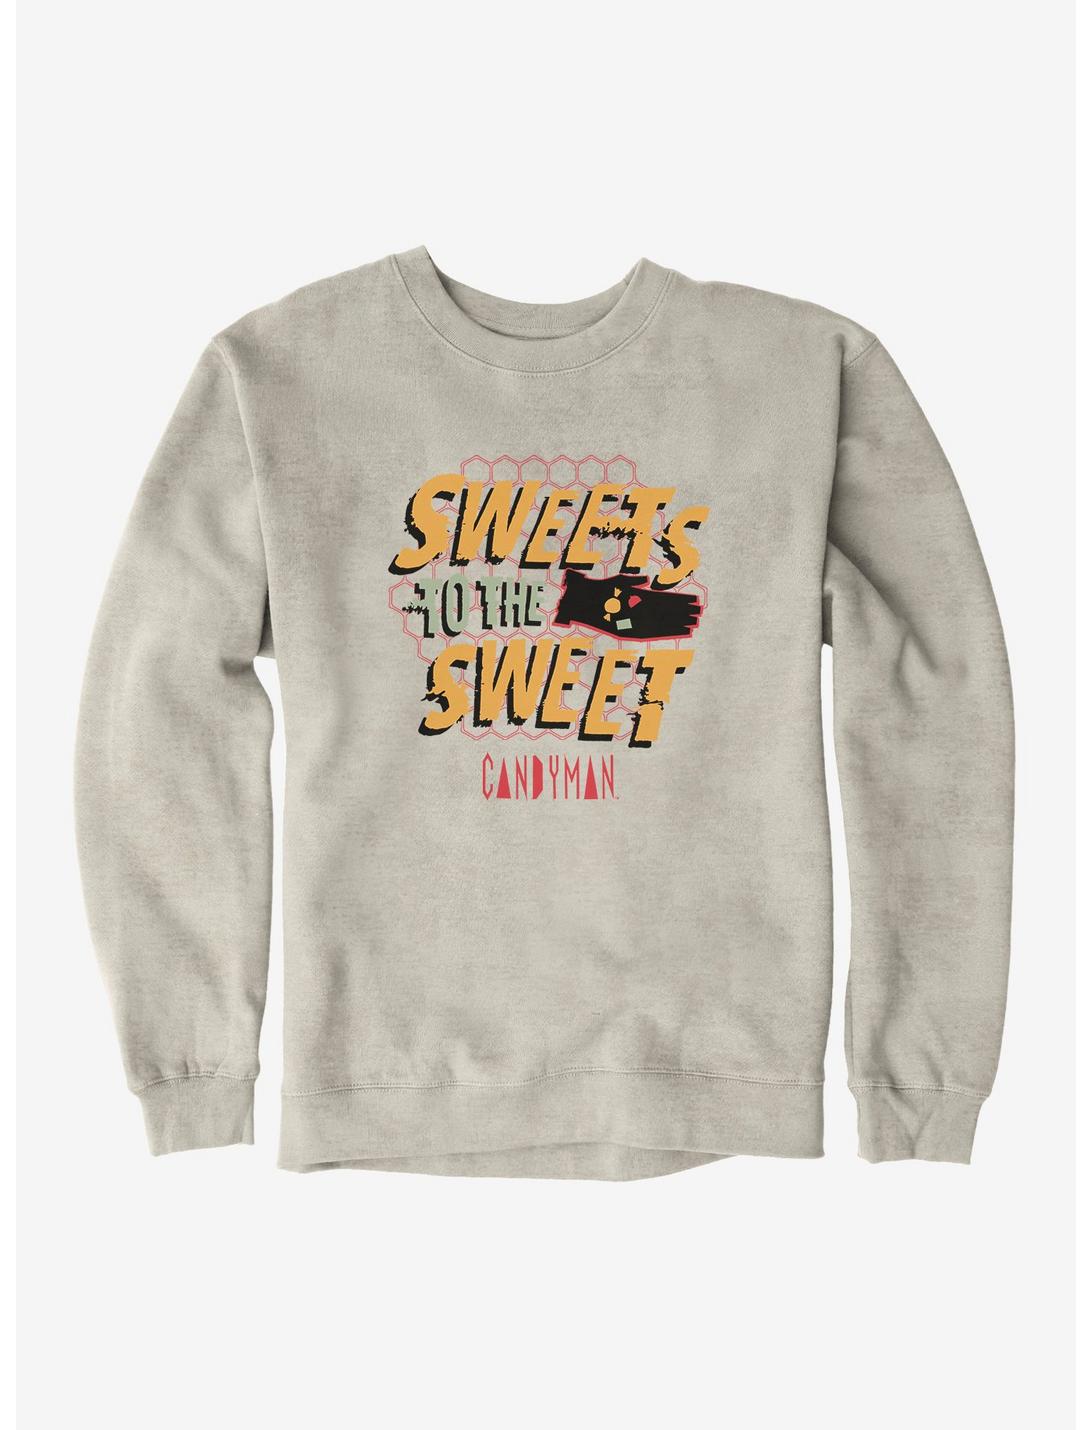 Candyman Sweets Sweatshirt, , hi-res